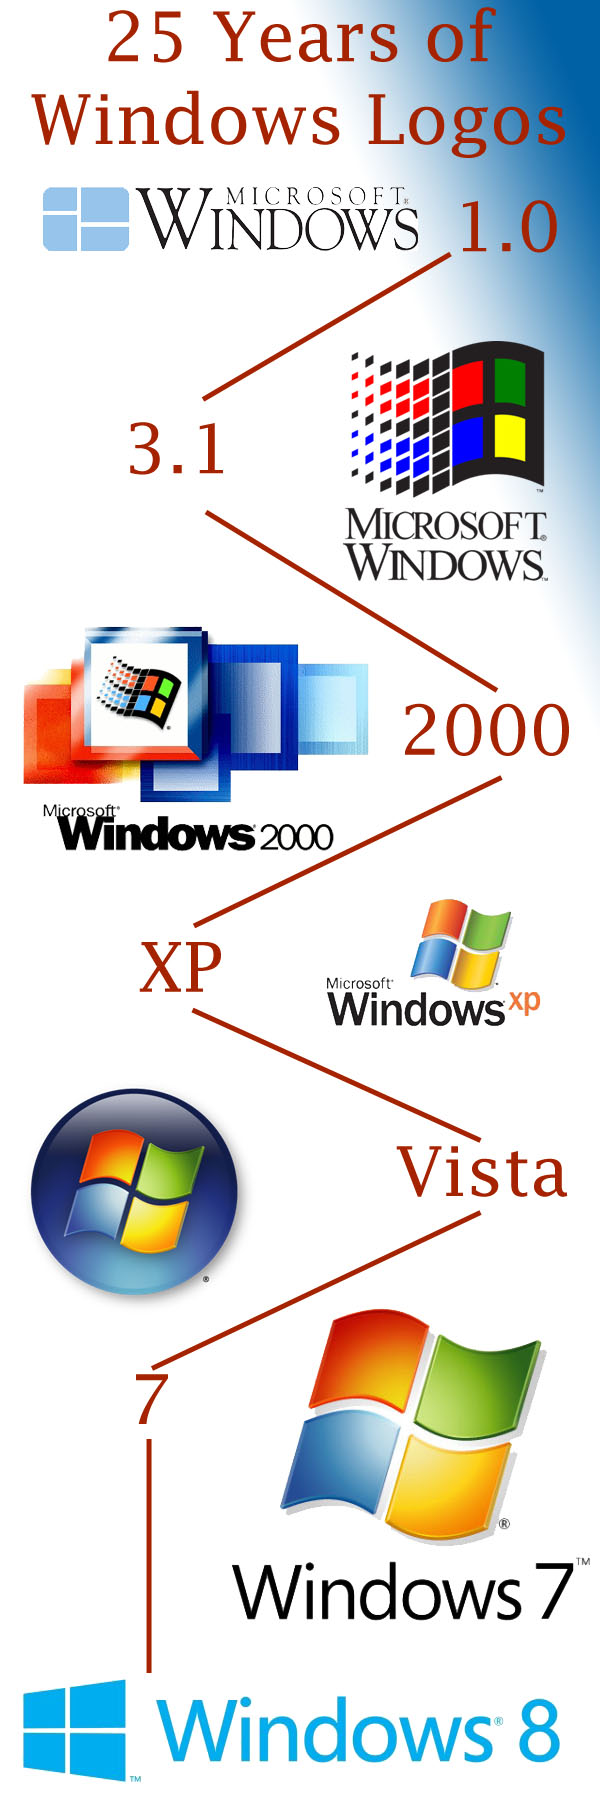 25-Years-of-Windows-Logos.jpg